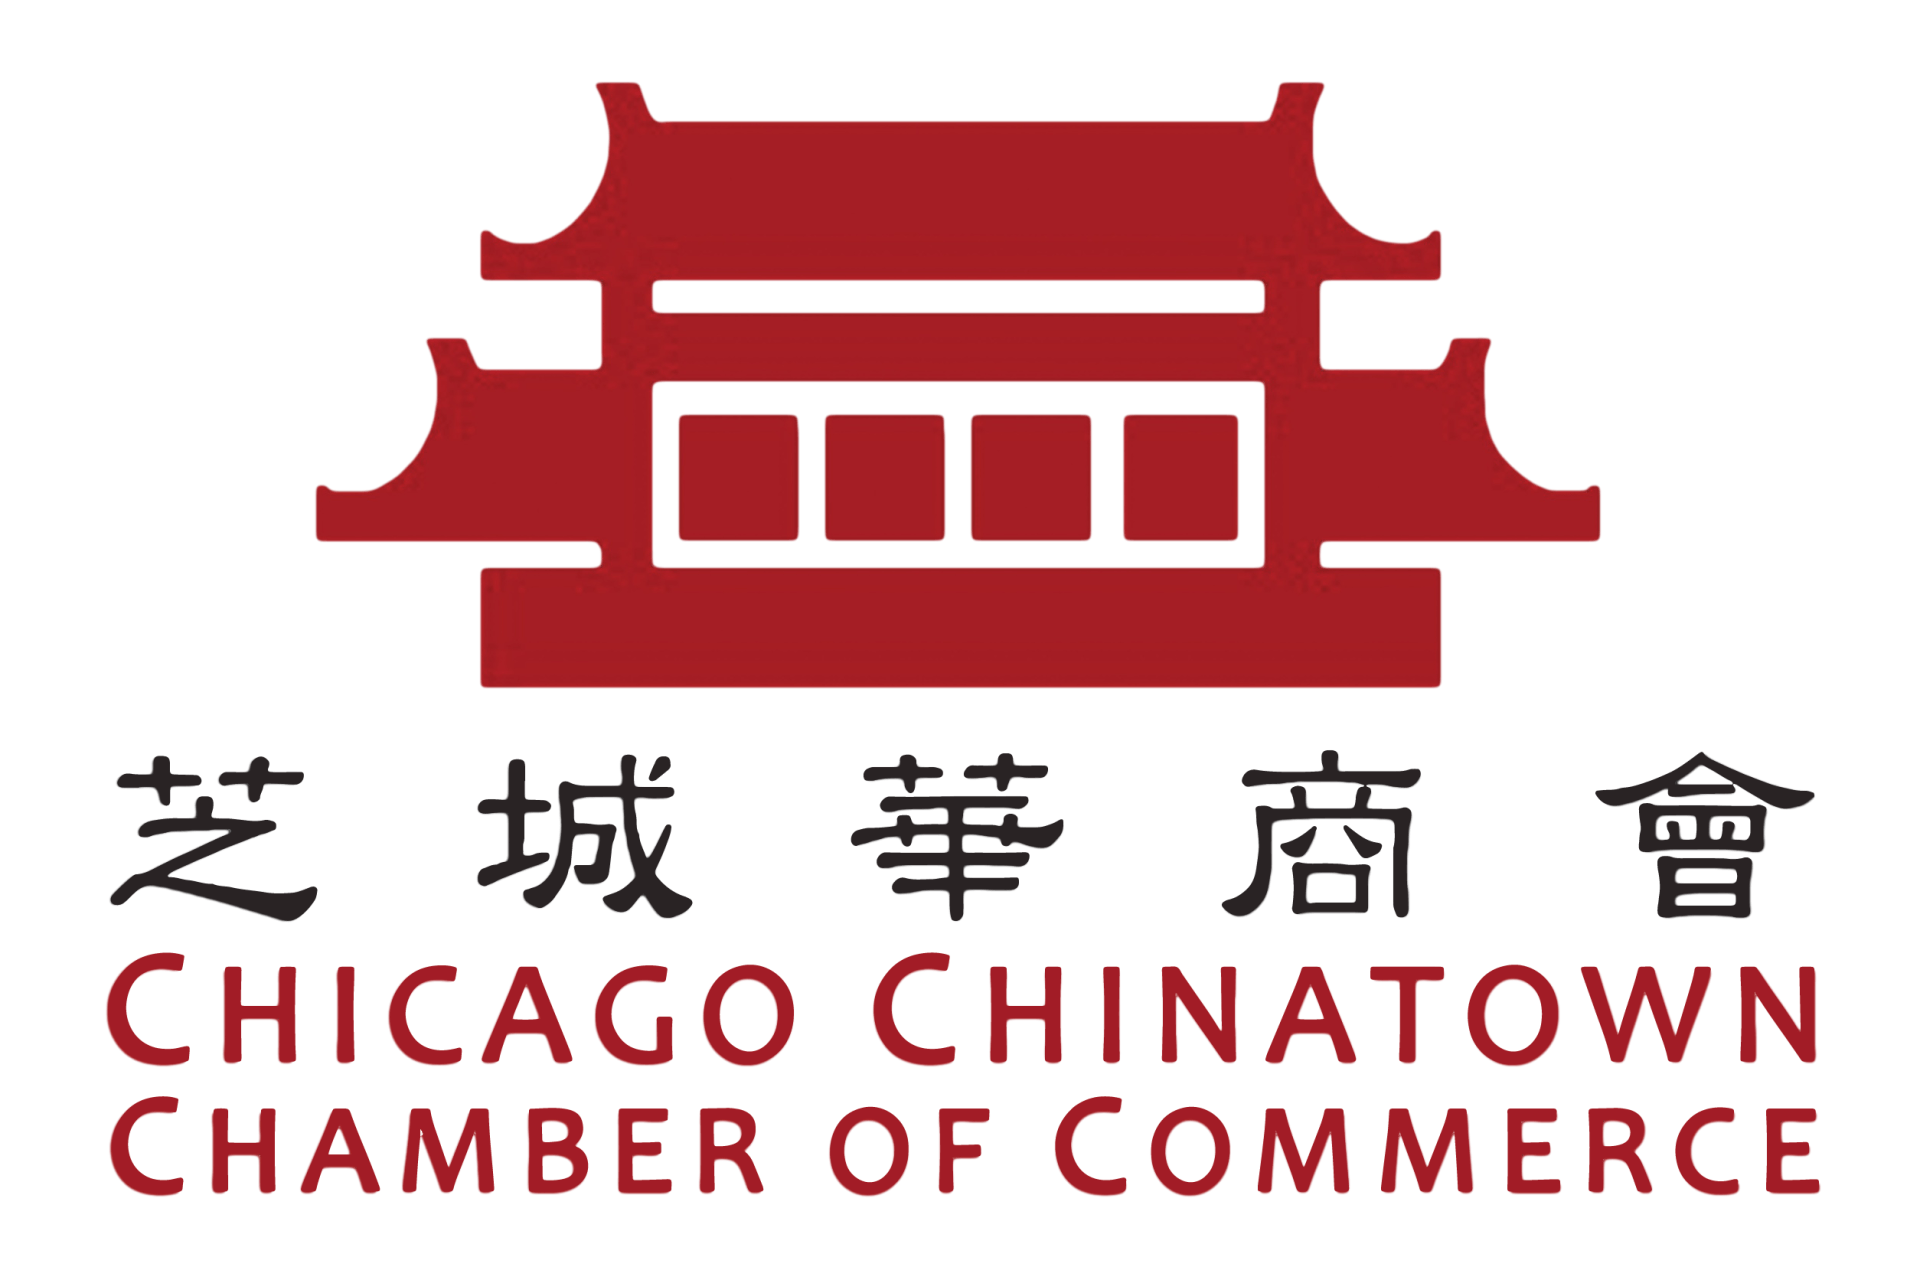 Chicago Chinatown Chamber of Commerce